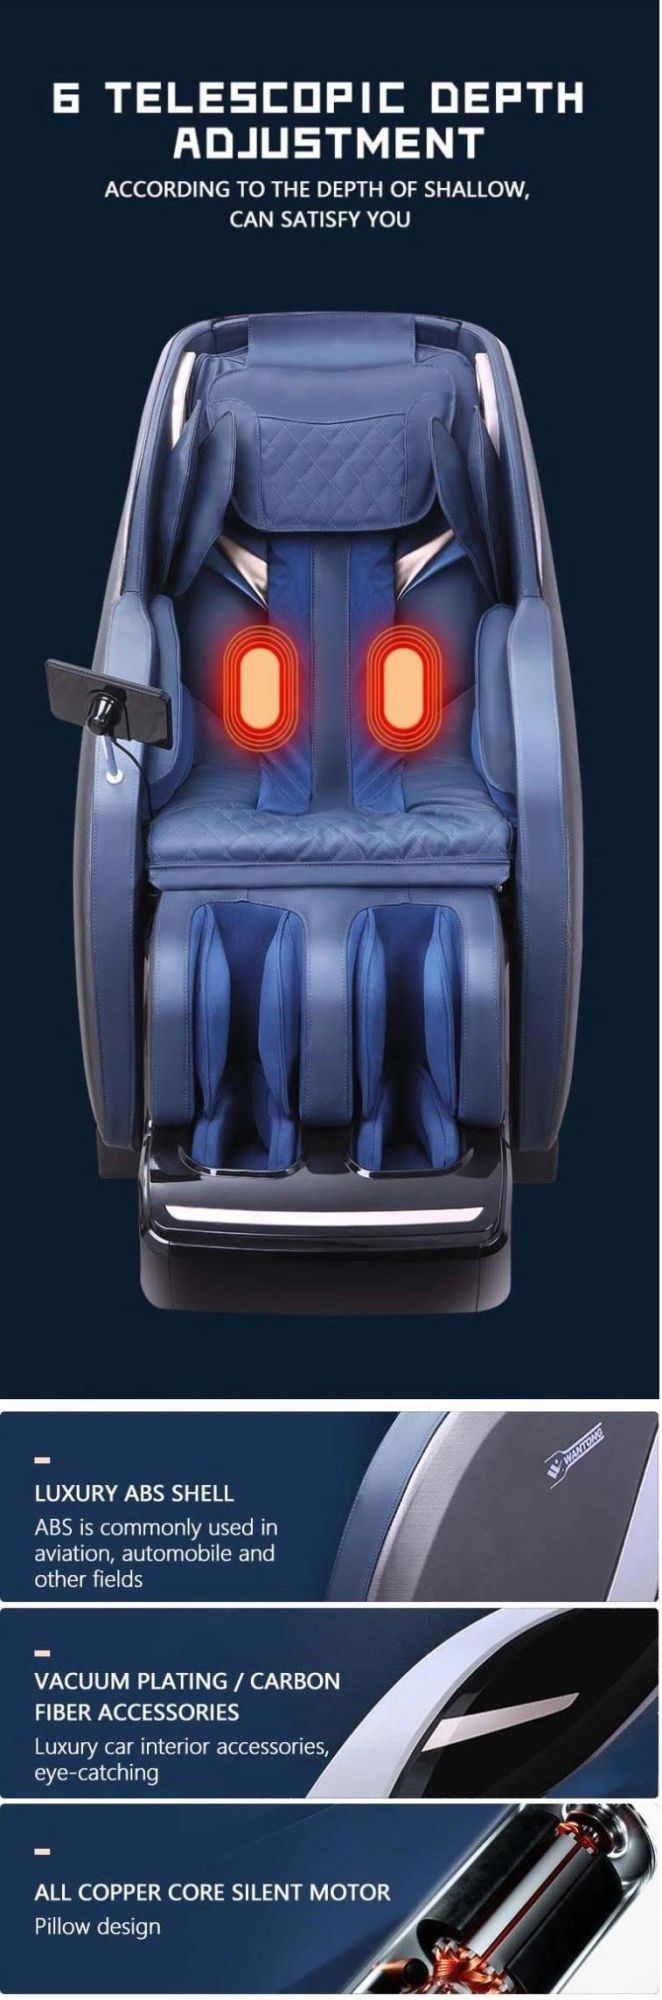 2021 New Design 4D Massage Chair Foot SPA Massage Seat Zero Gravity Massage Chair